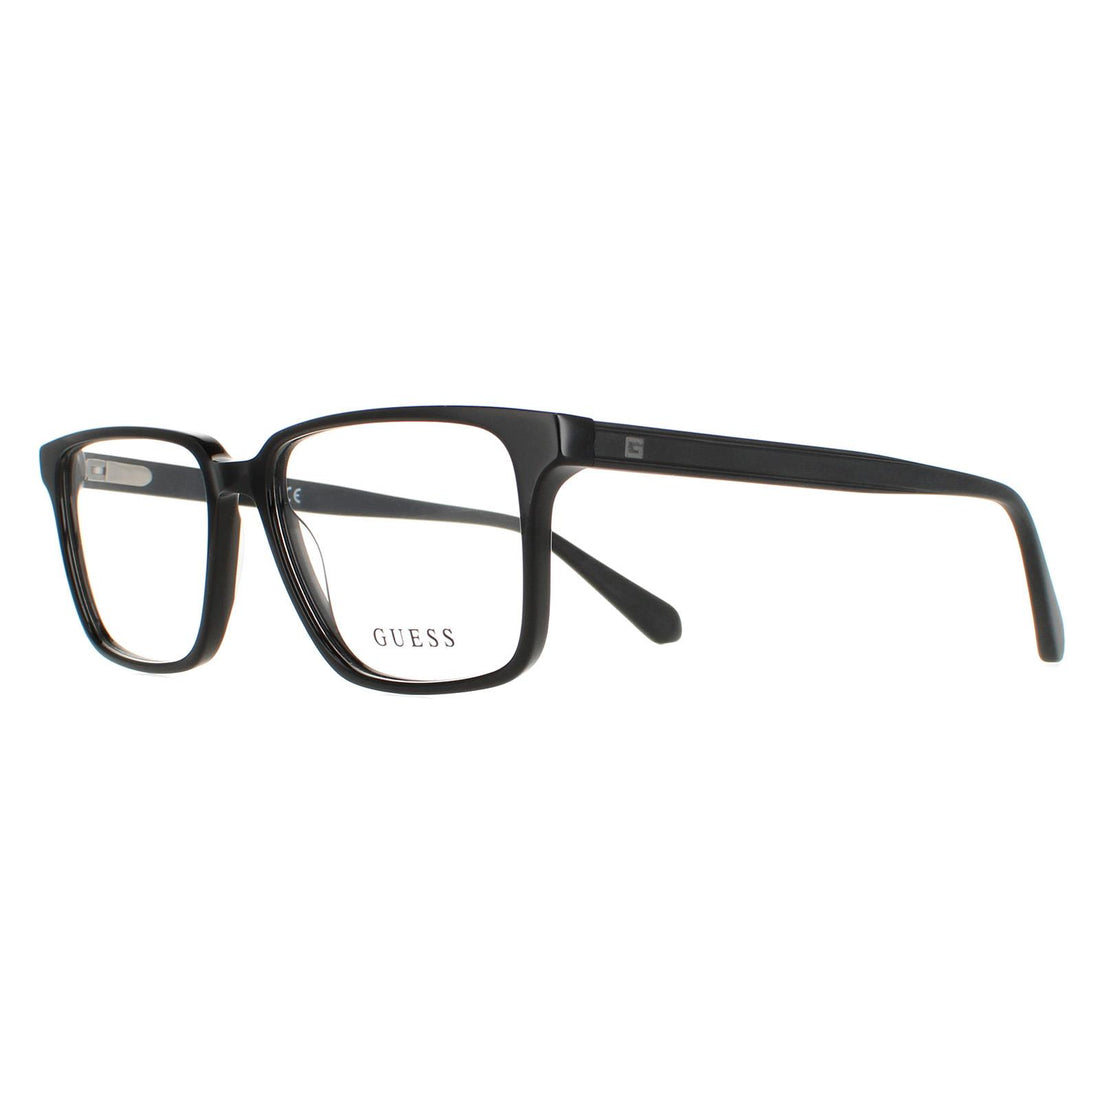 Guess Glasses Frames GU50047 001 Shiny Black Men